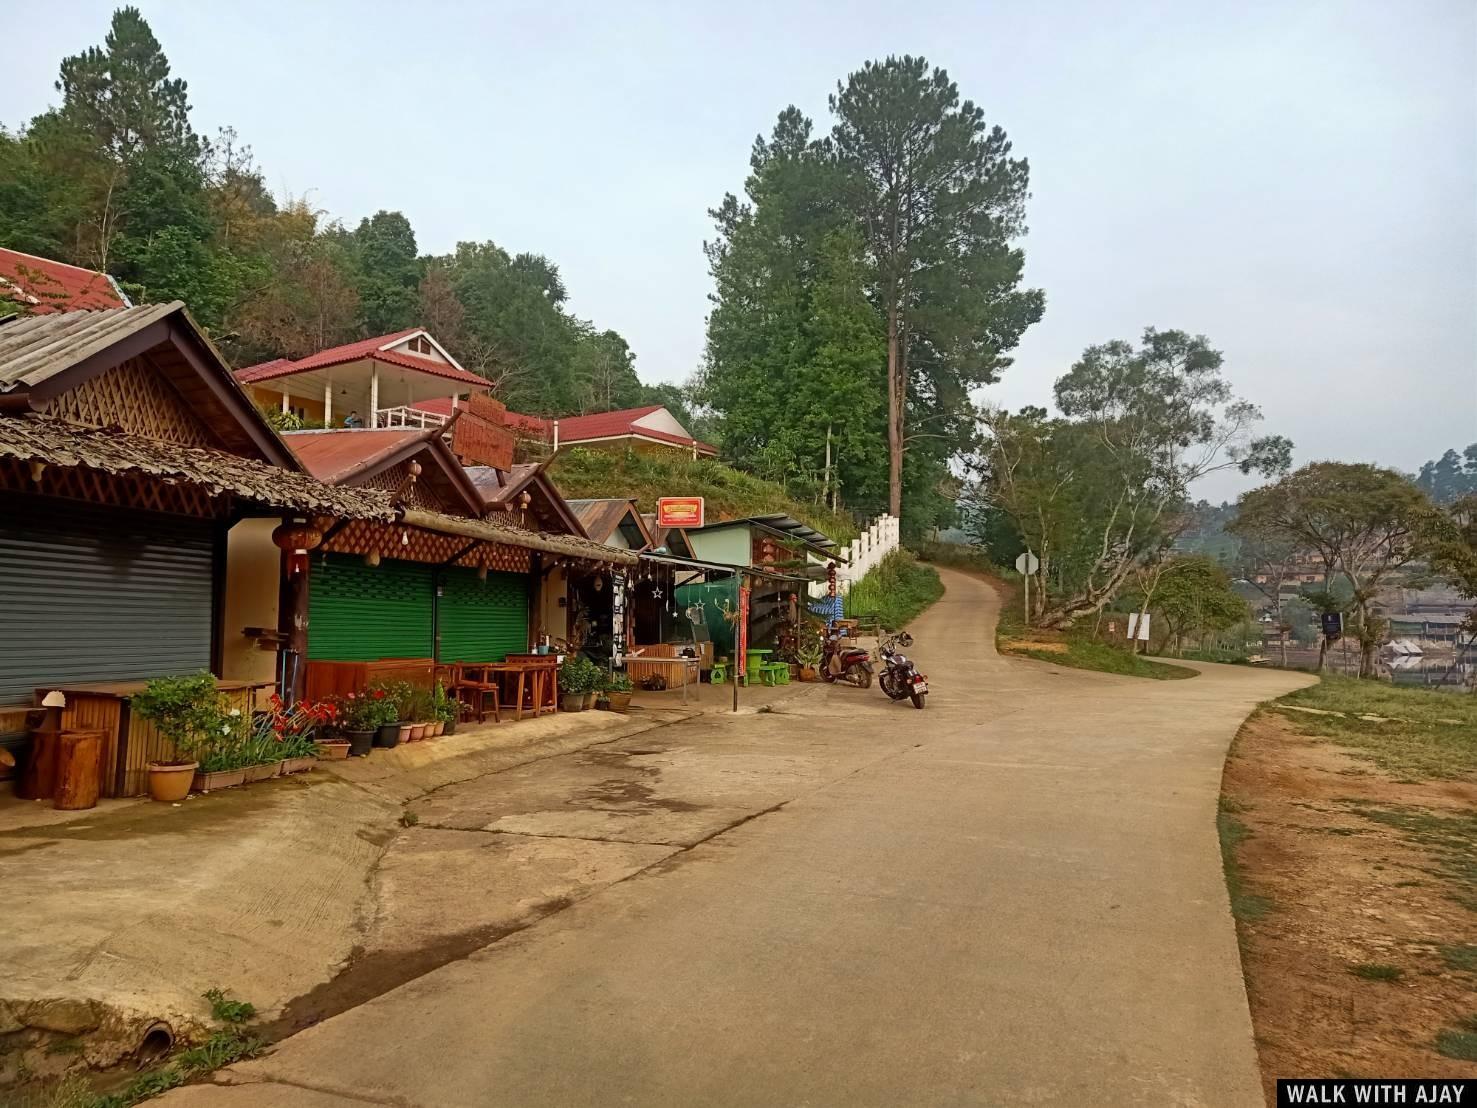 Driving Motorbike From Ban Rak Thai Village To Mae Hong Son : Thailand (Apr’21) - Day 3 15